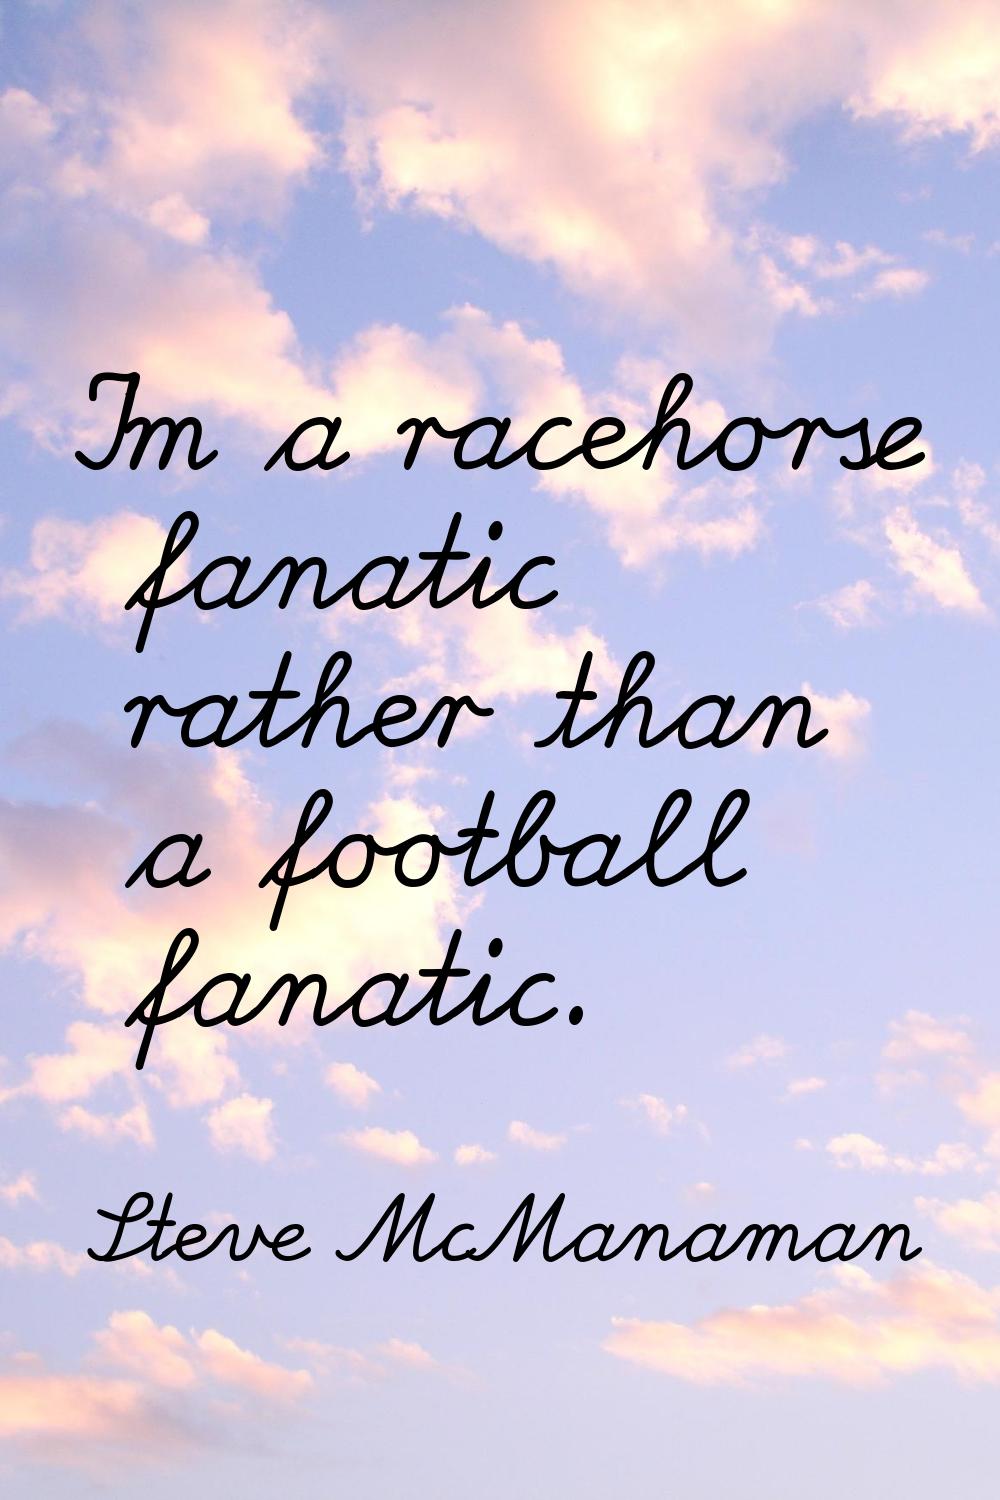 I'm a racehorse fanatic rather than a football fanatic.